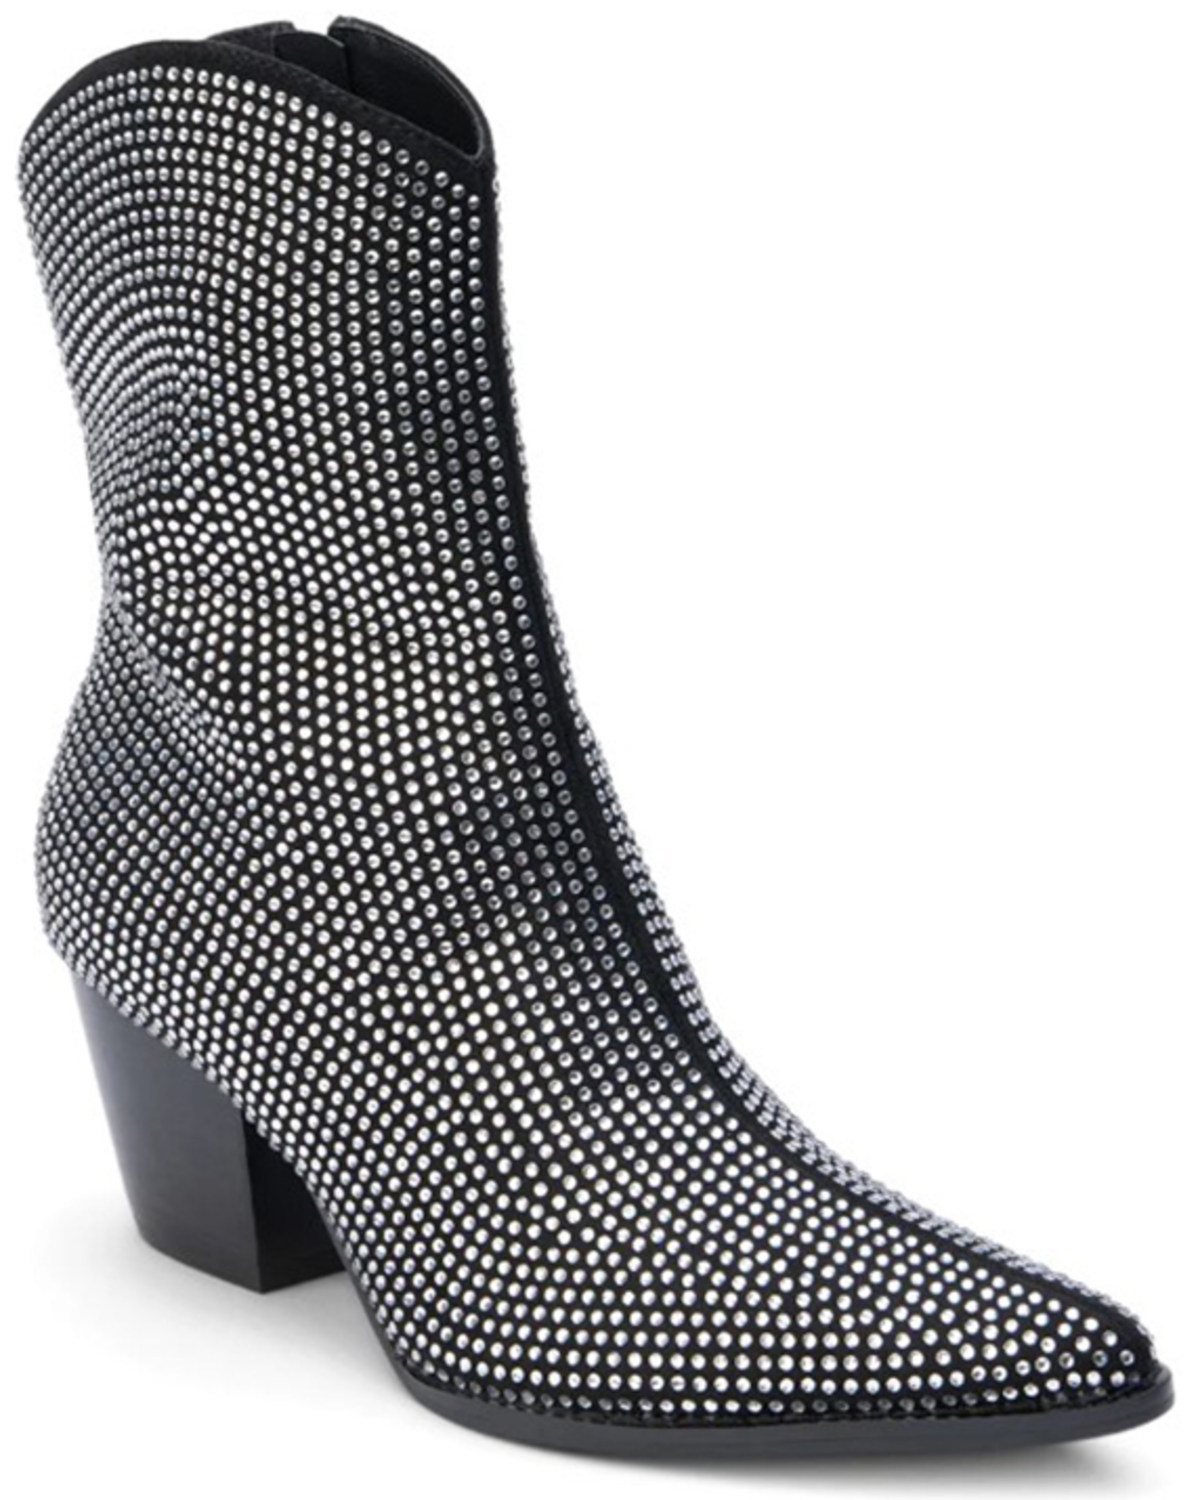 Matisse Women's Hazel Fashion Boots - Pointed Toe